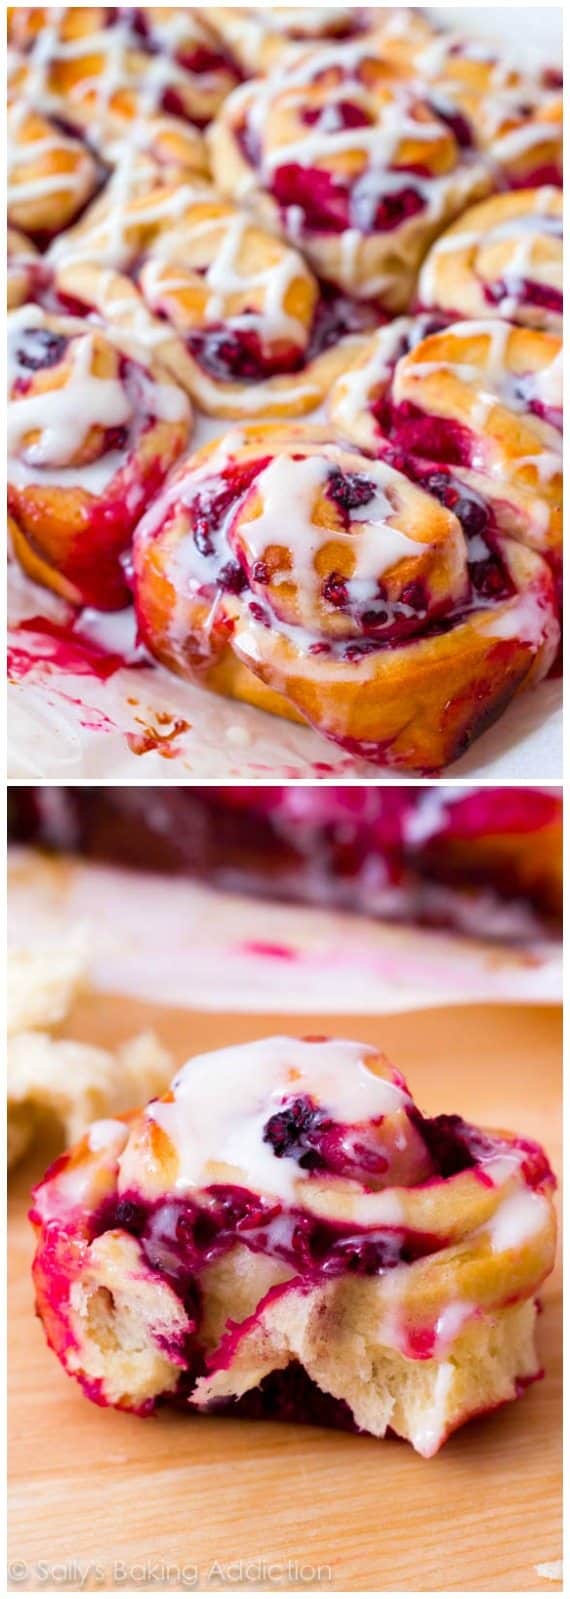 2 images of raspberry sweet rolls